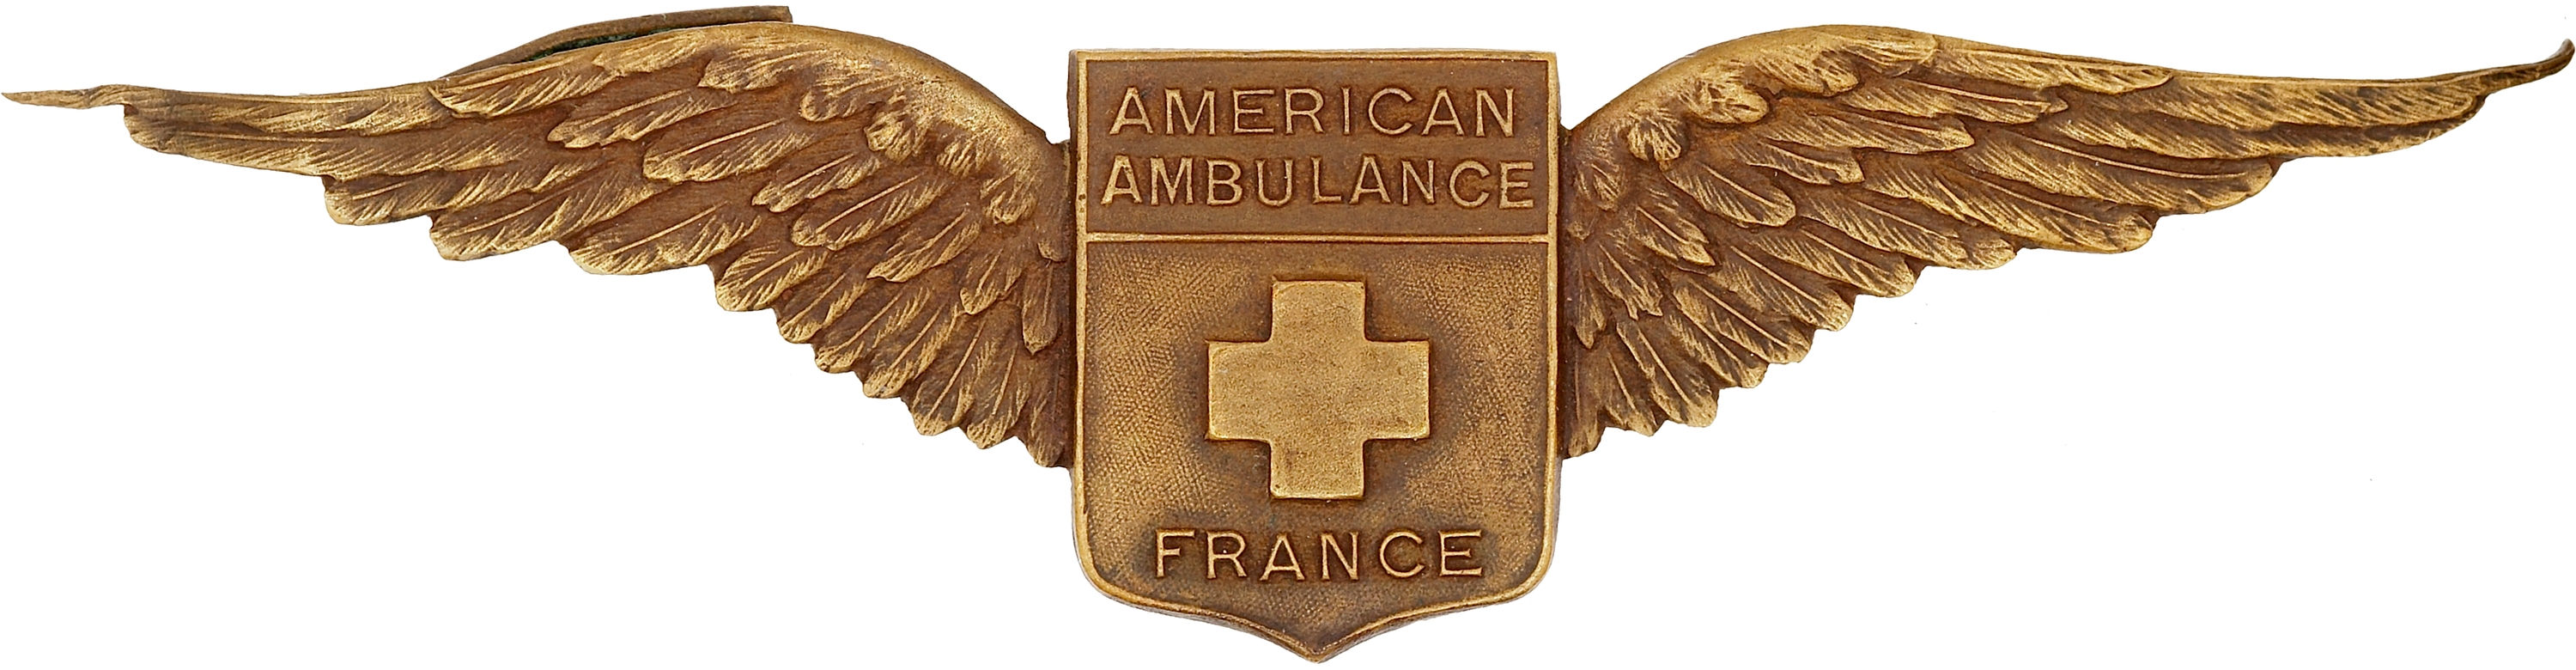 1916 American Ambulance Hat Badge.jpeg